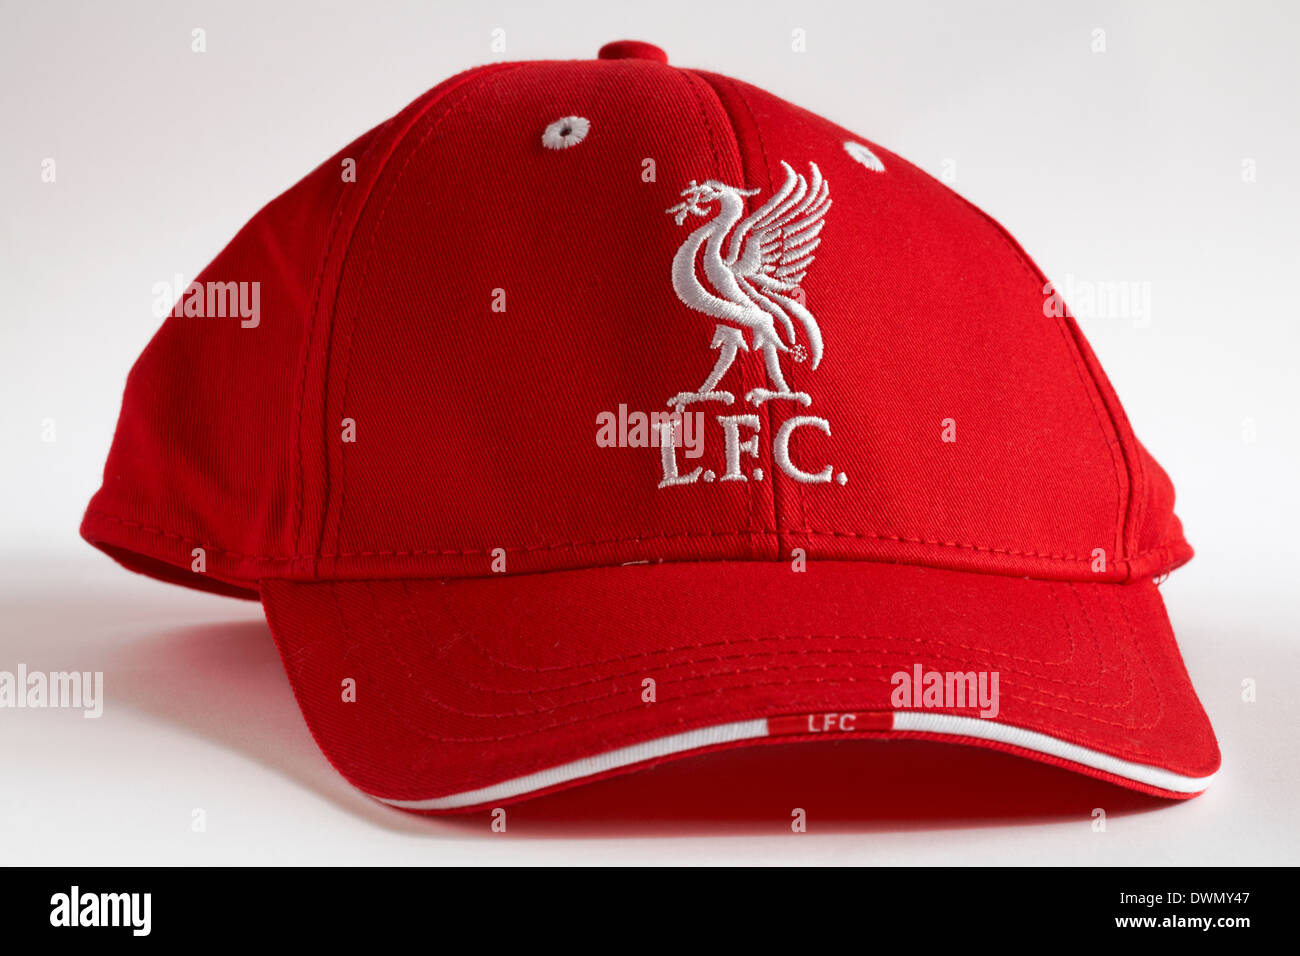 Liverpool Football Club baseball cap isolated on white background Stock  Photo - Alamy